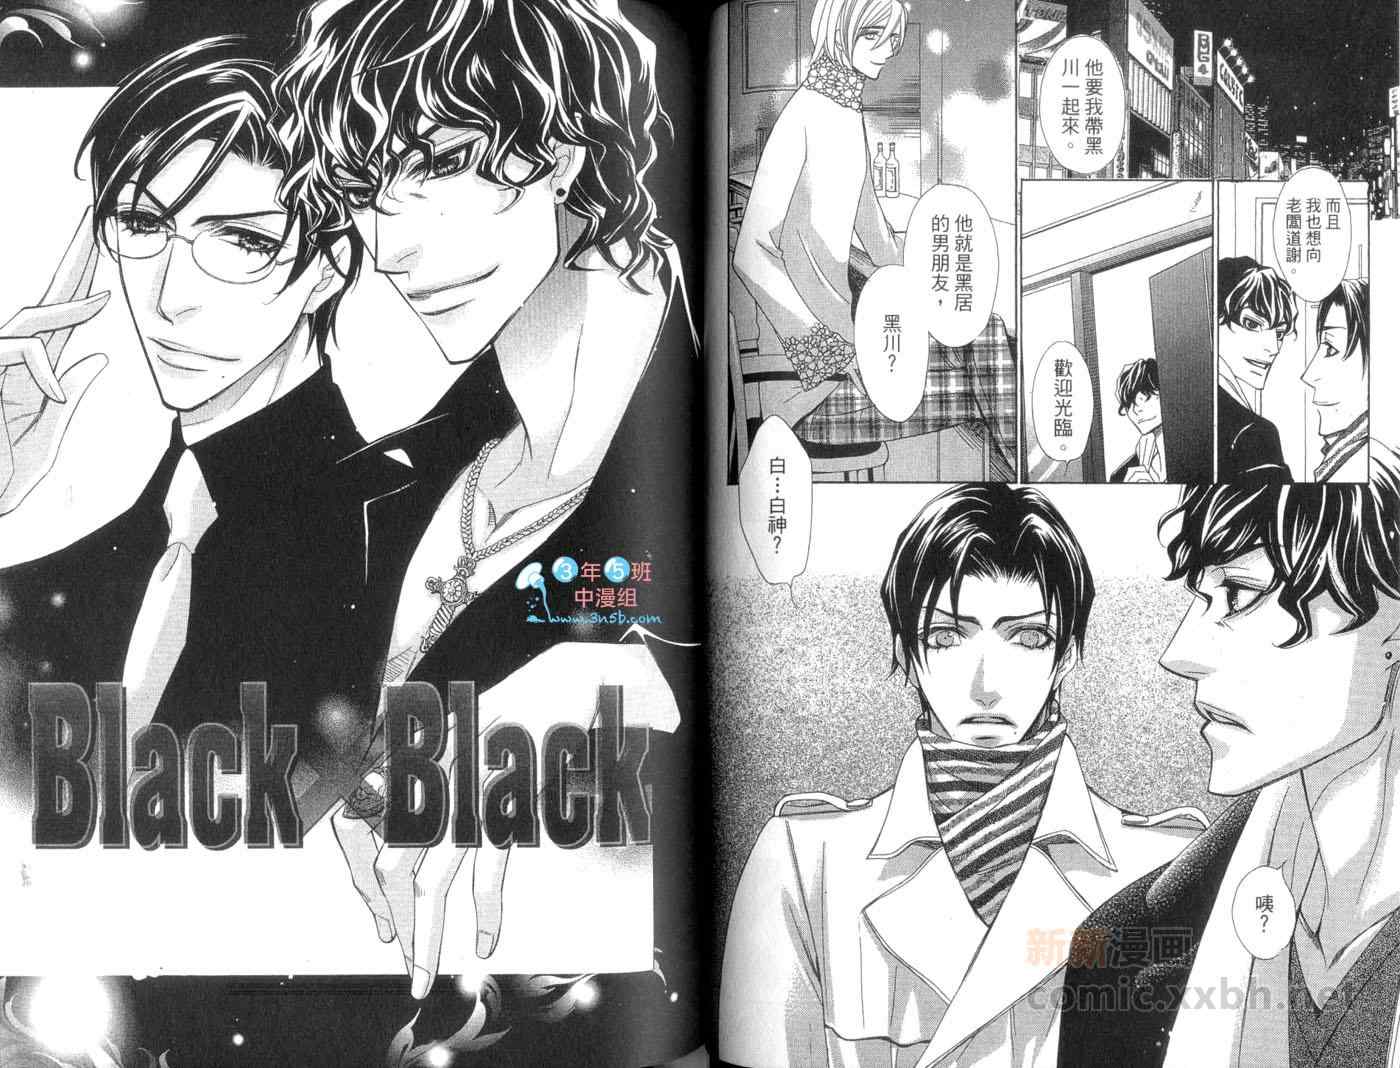 《Black X Black》漫画 01卷